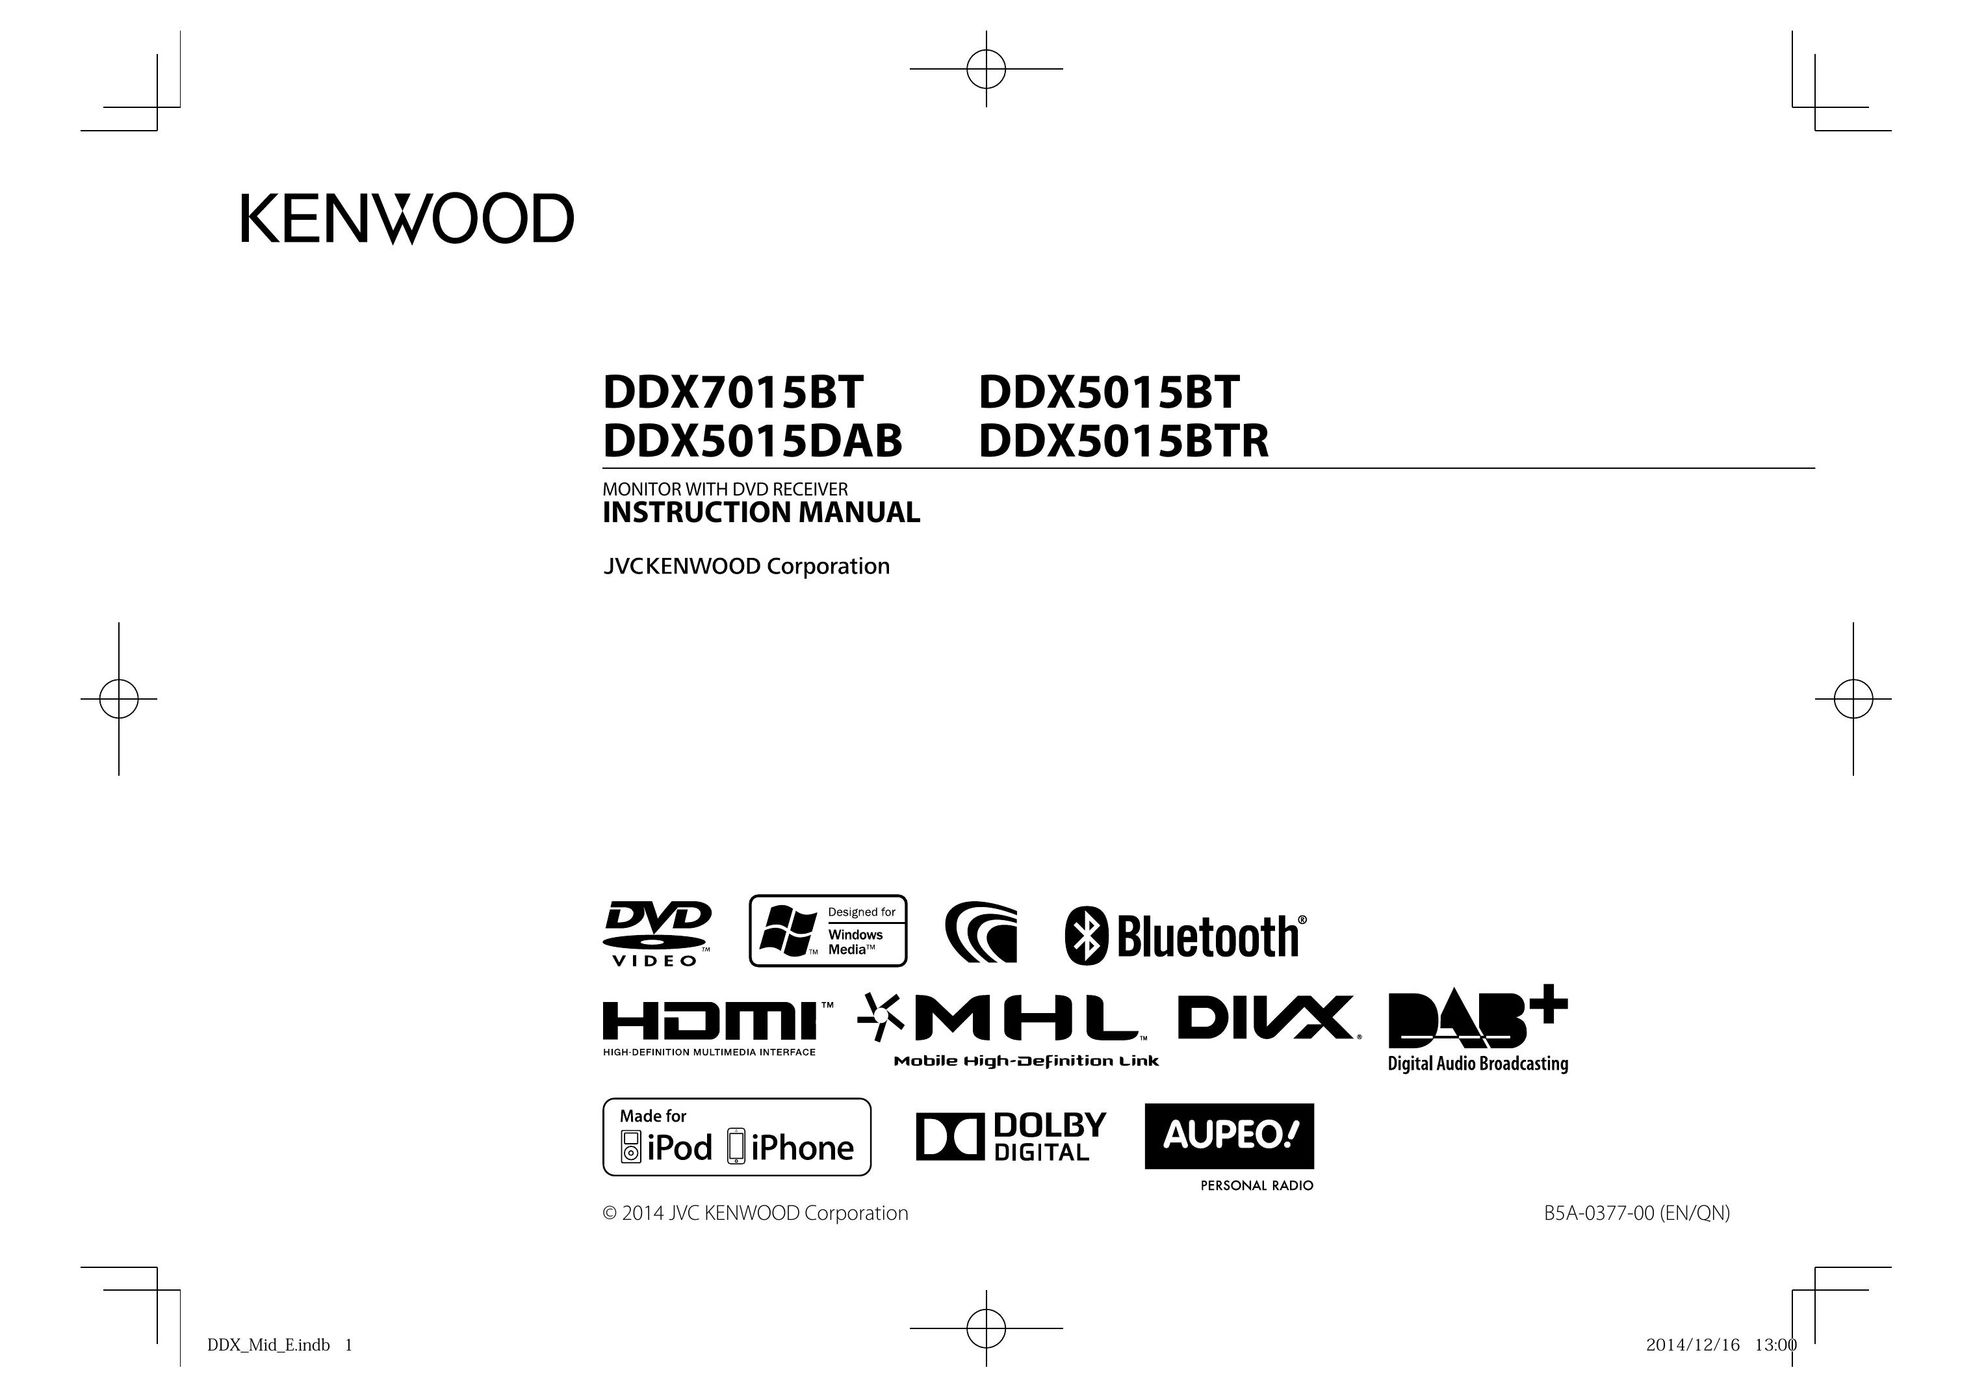 Kenwood DDX5015DAB Car Video System User Manual